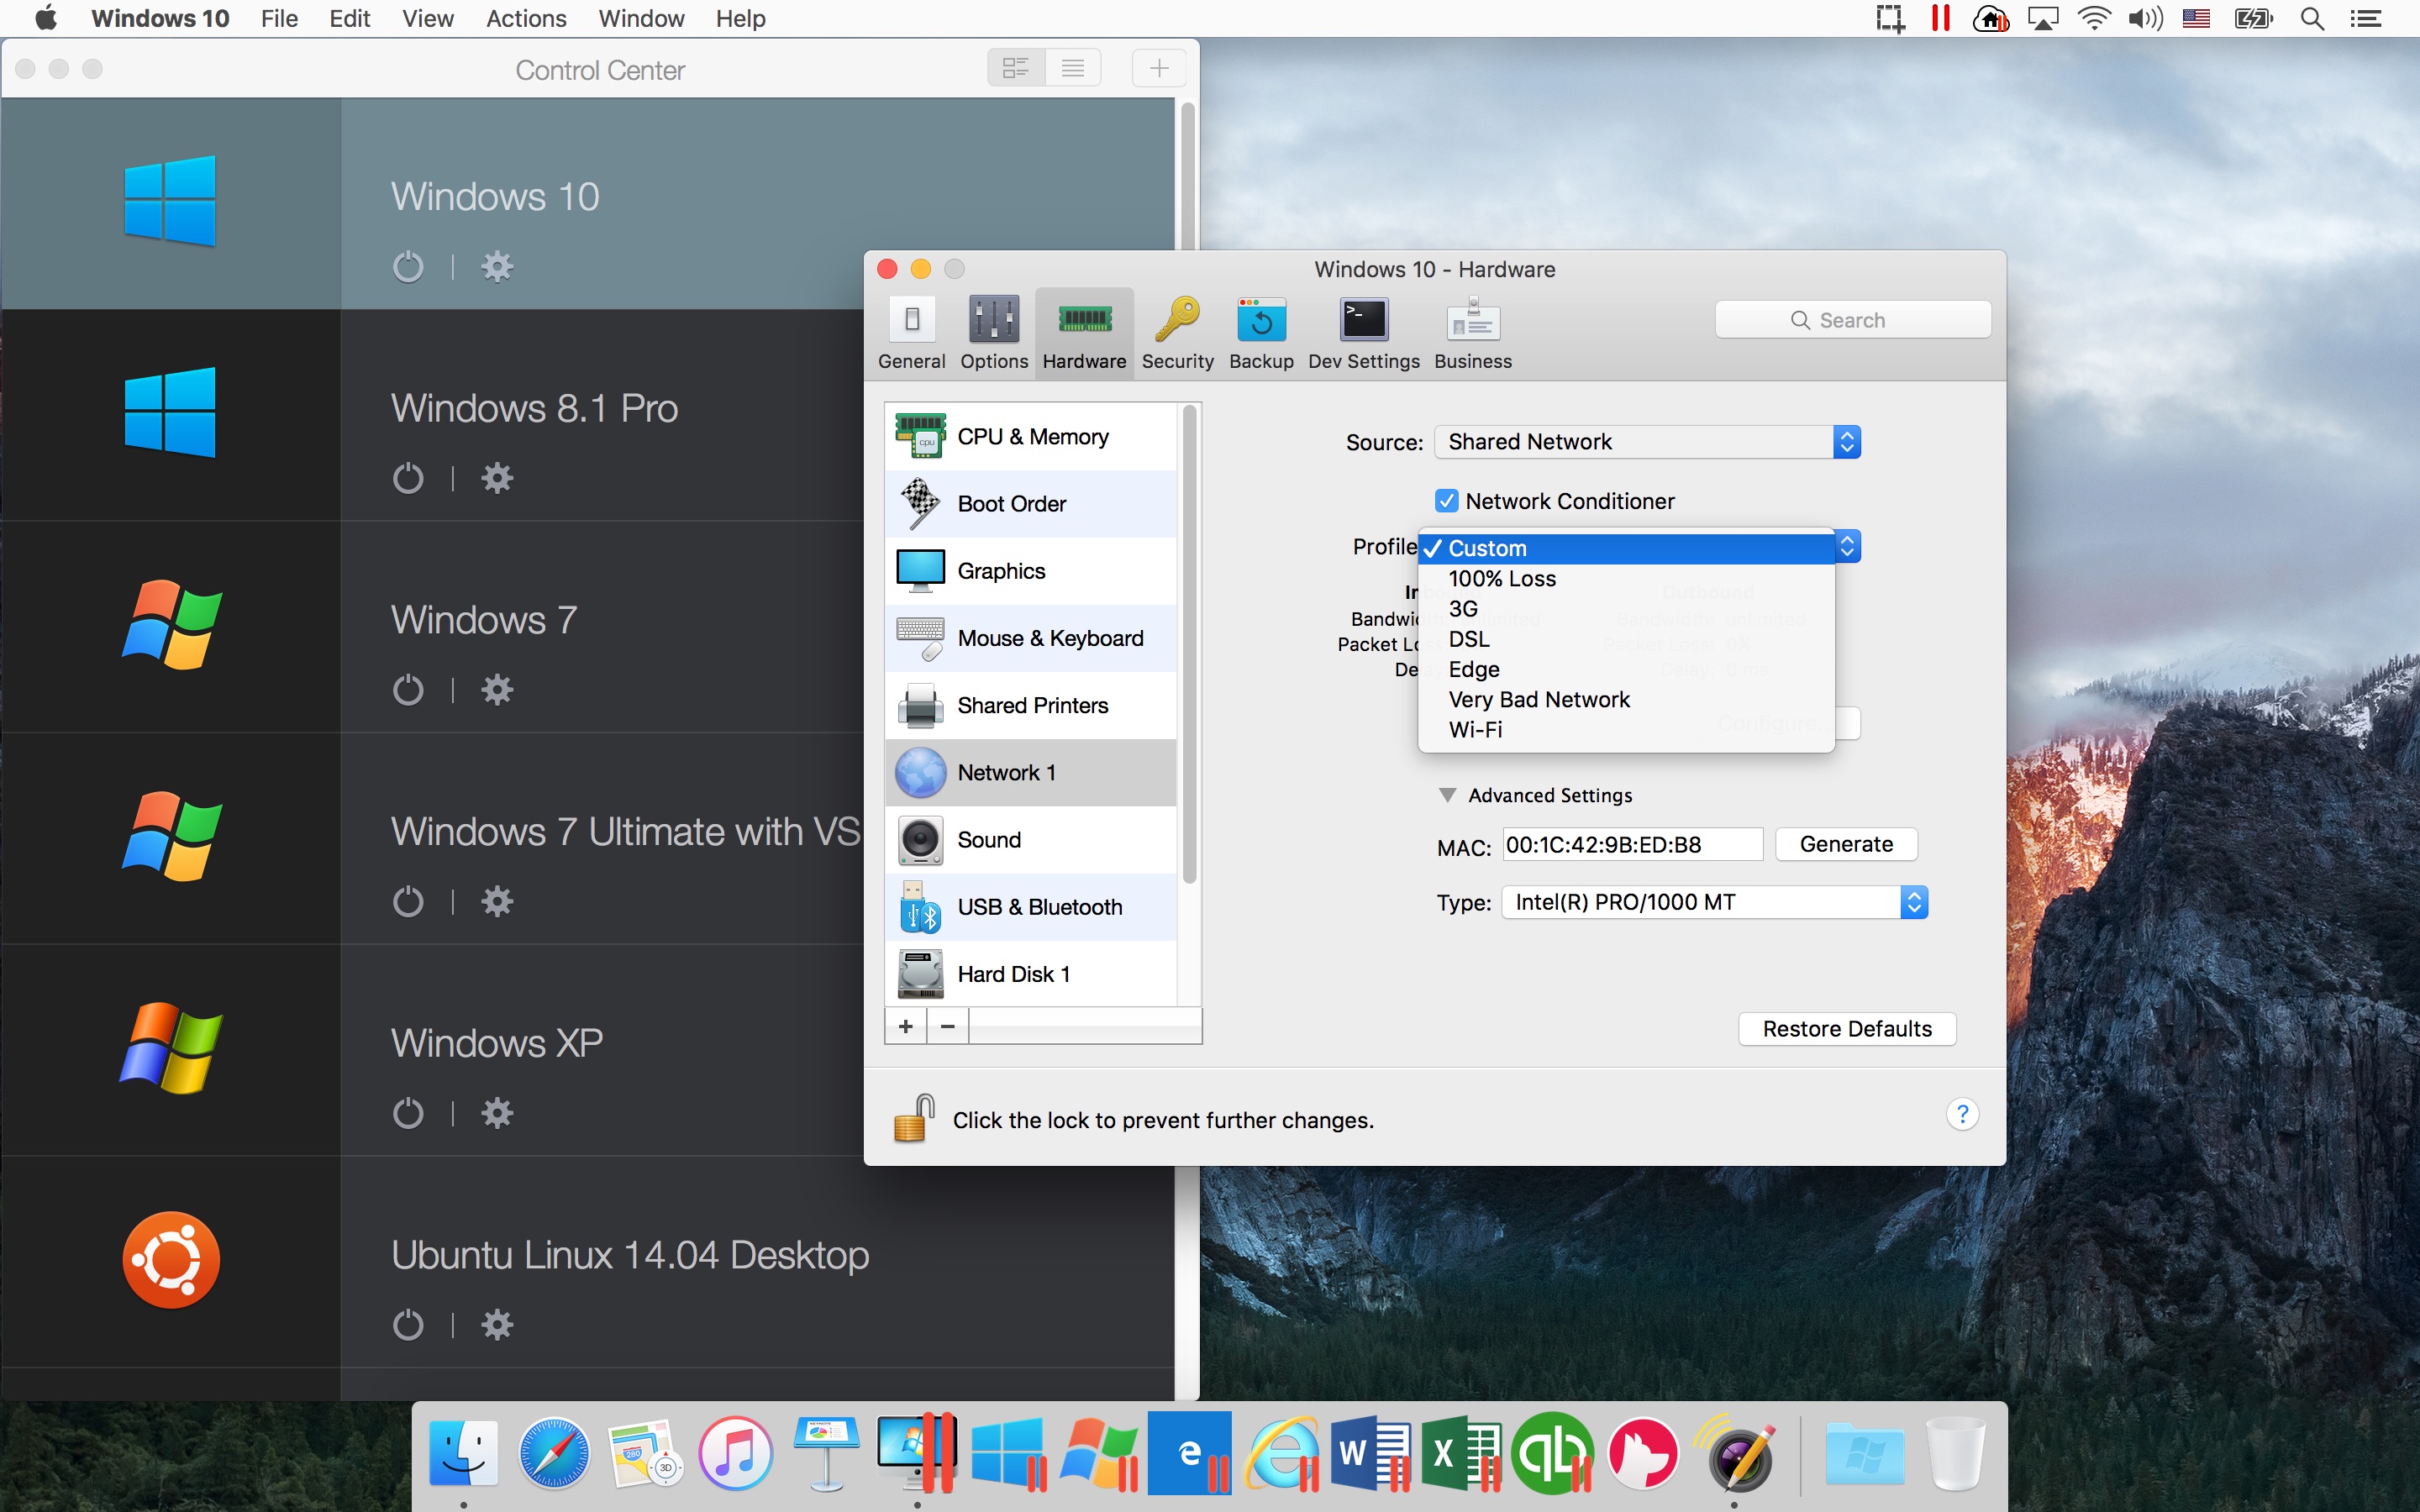 download parallels desktop 5 for mac free